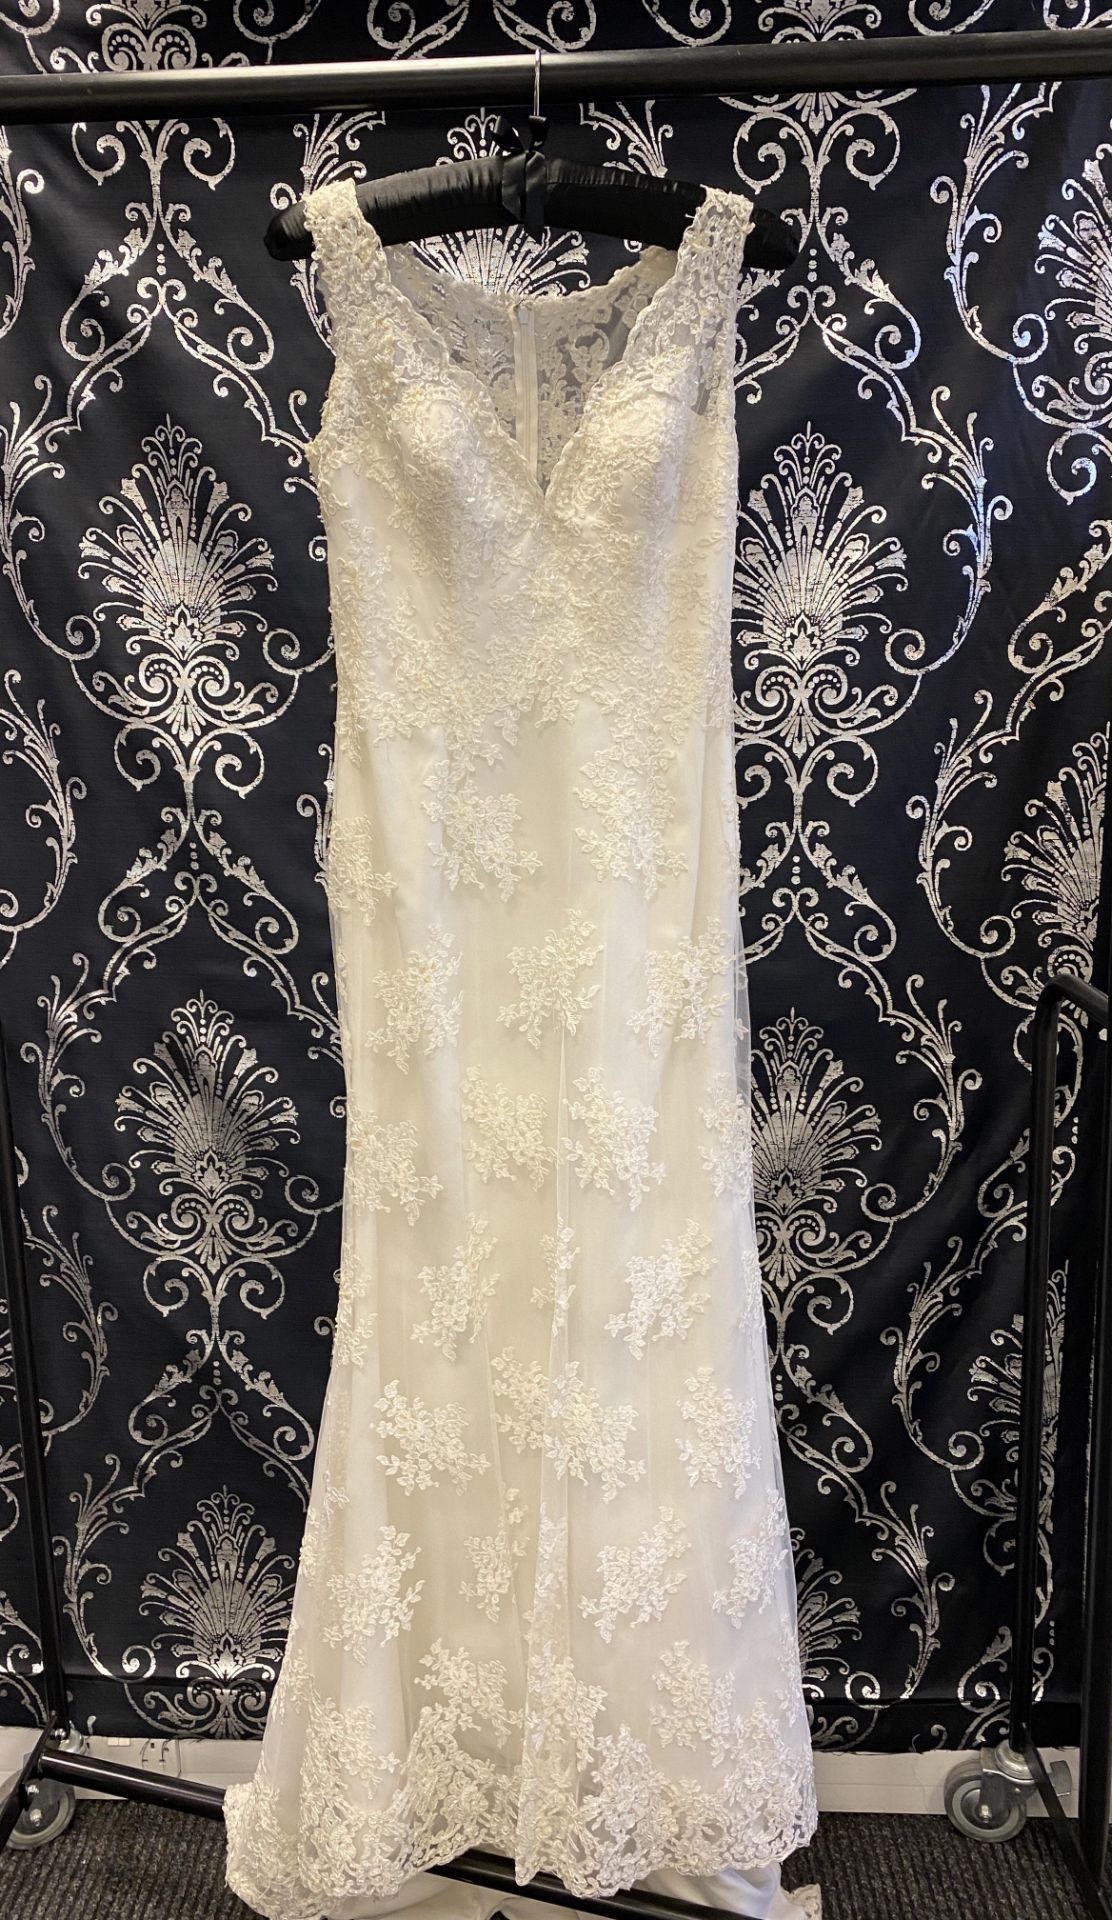 1 x LUSAN MANDONGUS 'Seychelle' Lace Overlay Biased Cut Designer Wedding Dress RRP £1,500 UK10